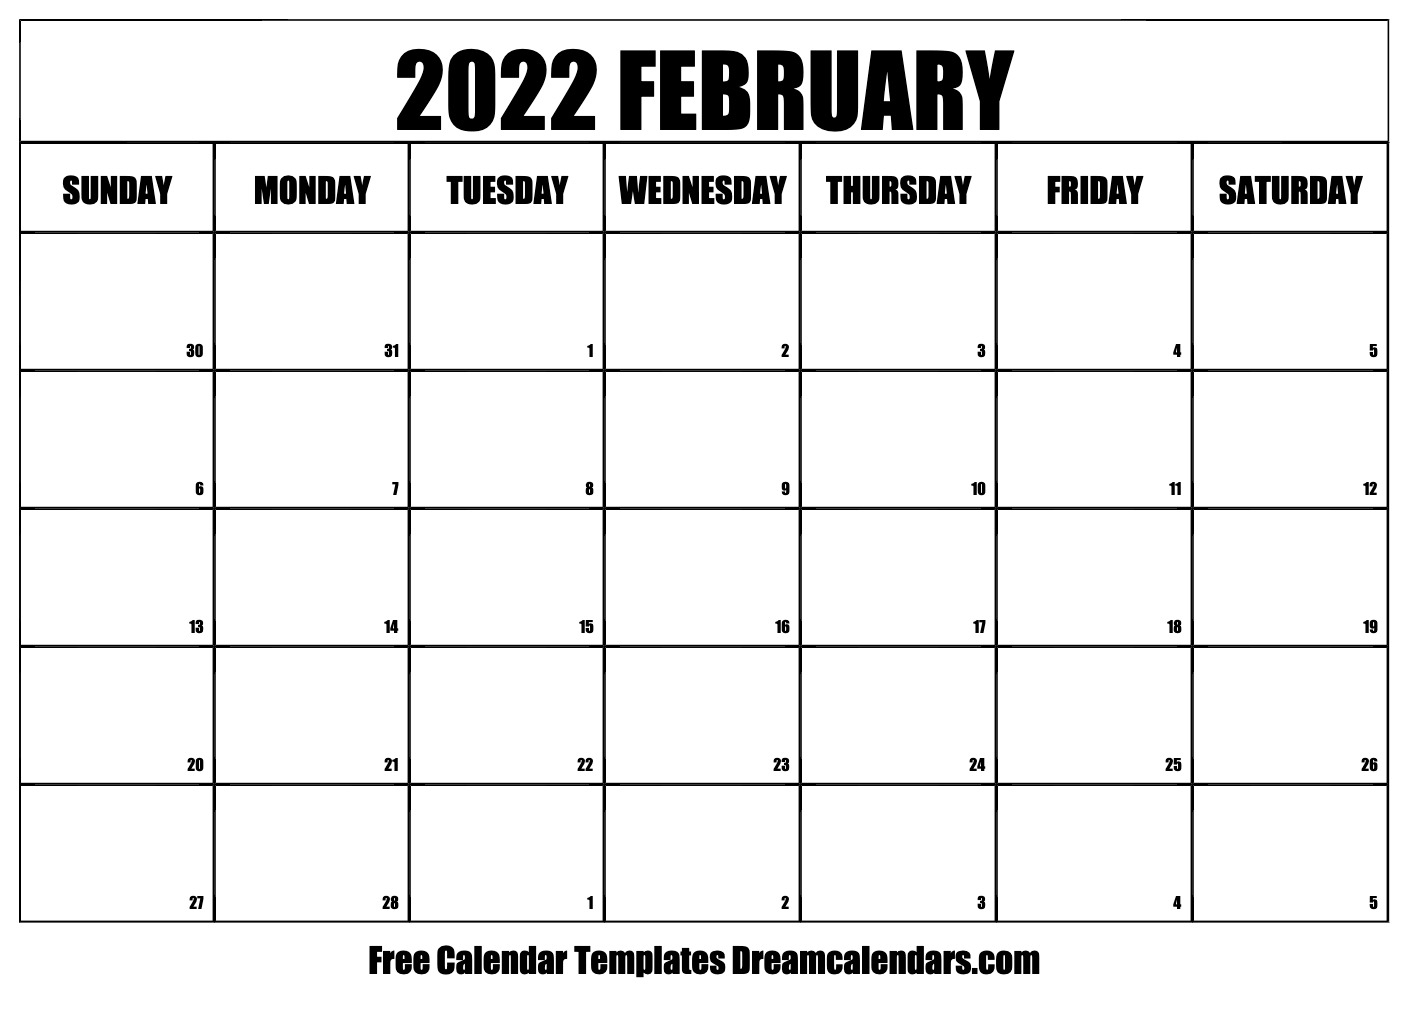 Take February 2022 Hijri Calendar